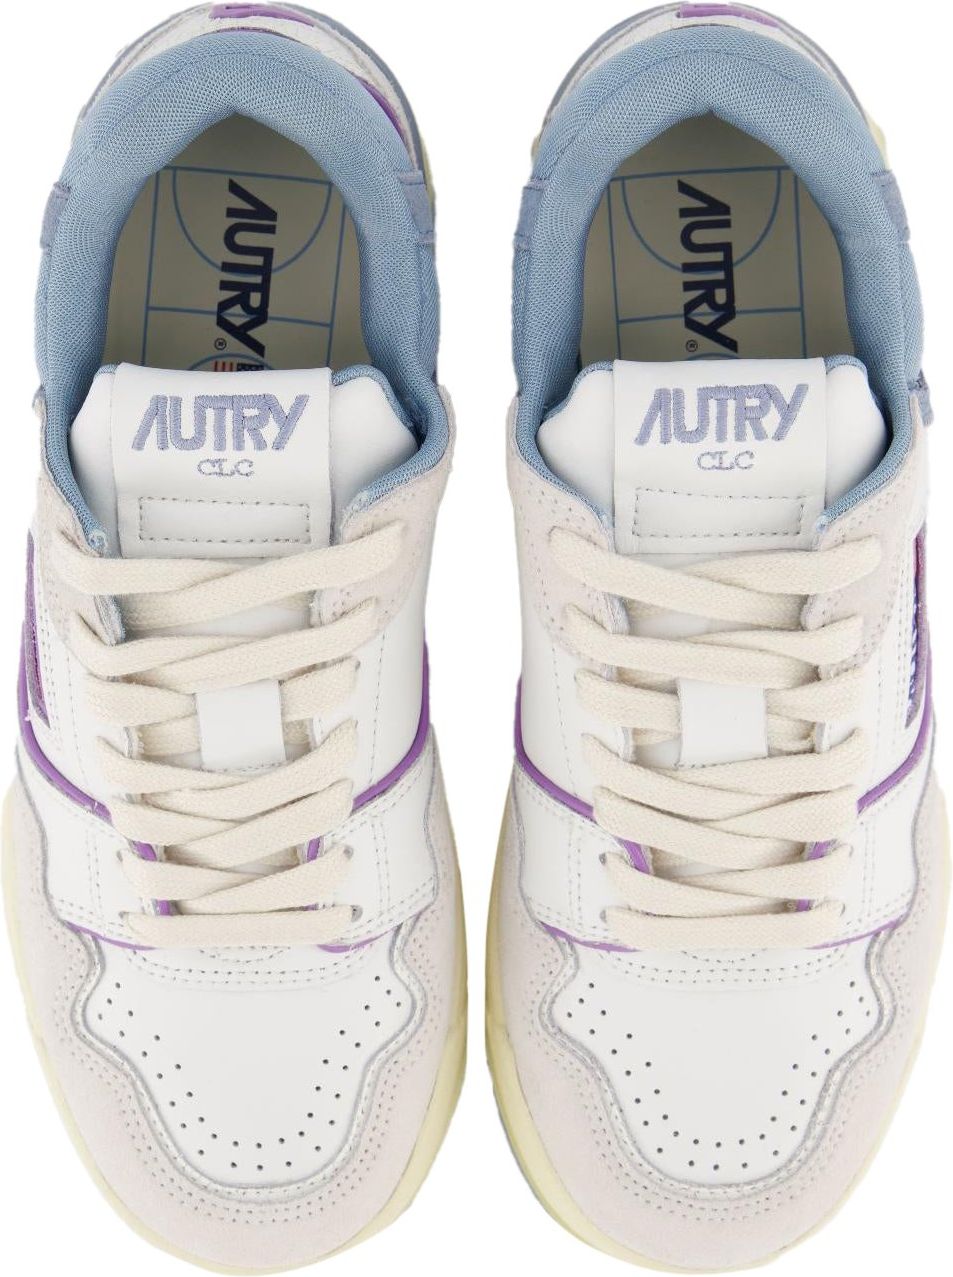 Autry Dames CLC Sneaker Wit/Paars/Blauw Wit